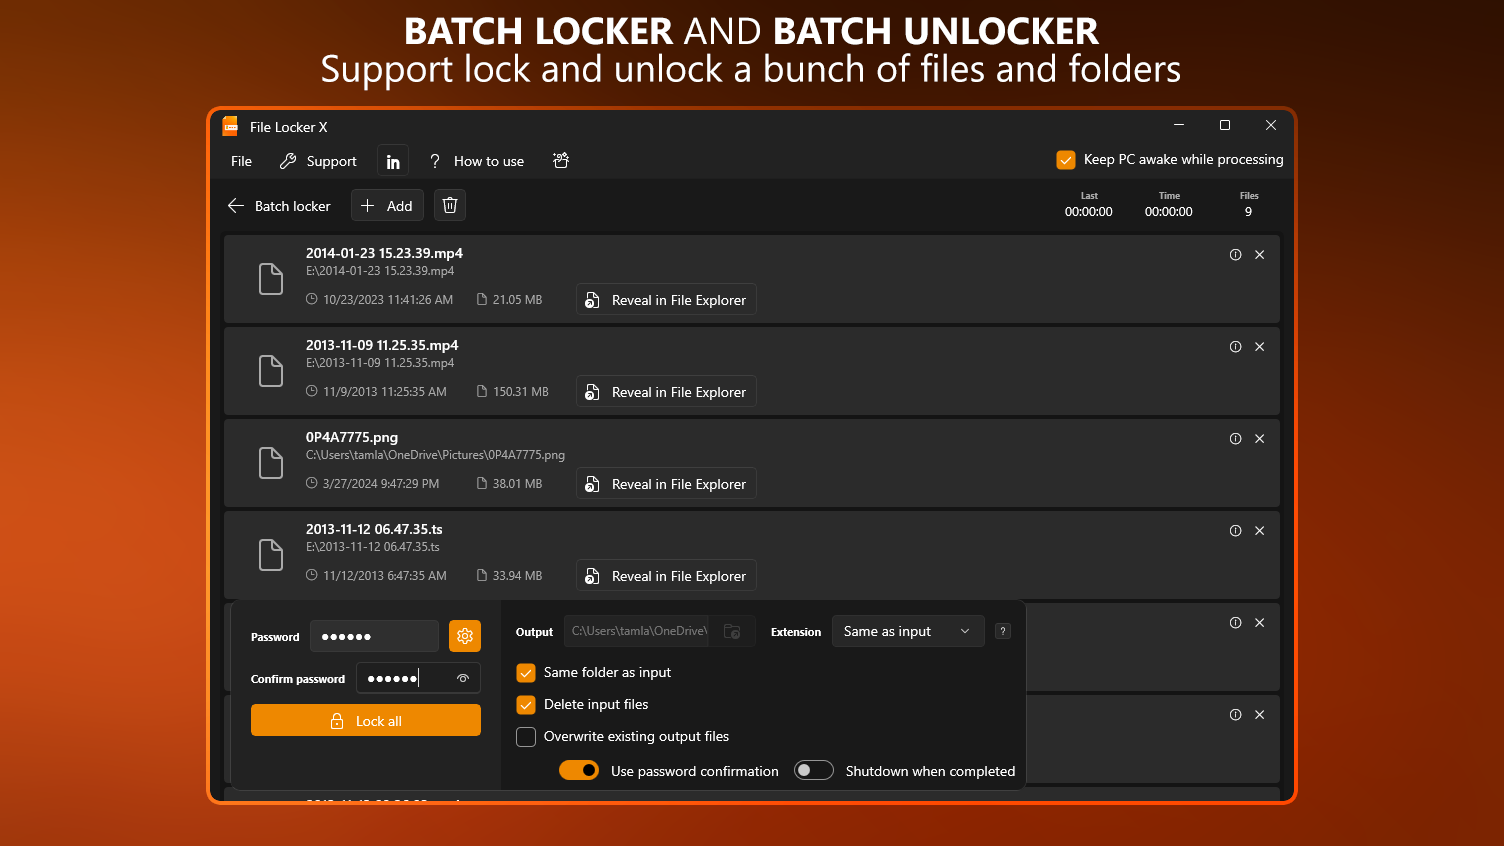 Batch Locker And Batch Unlocker - Support lock and unlock a bunch of files and folders